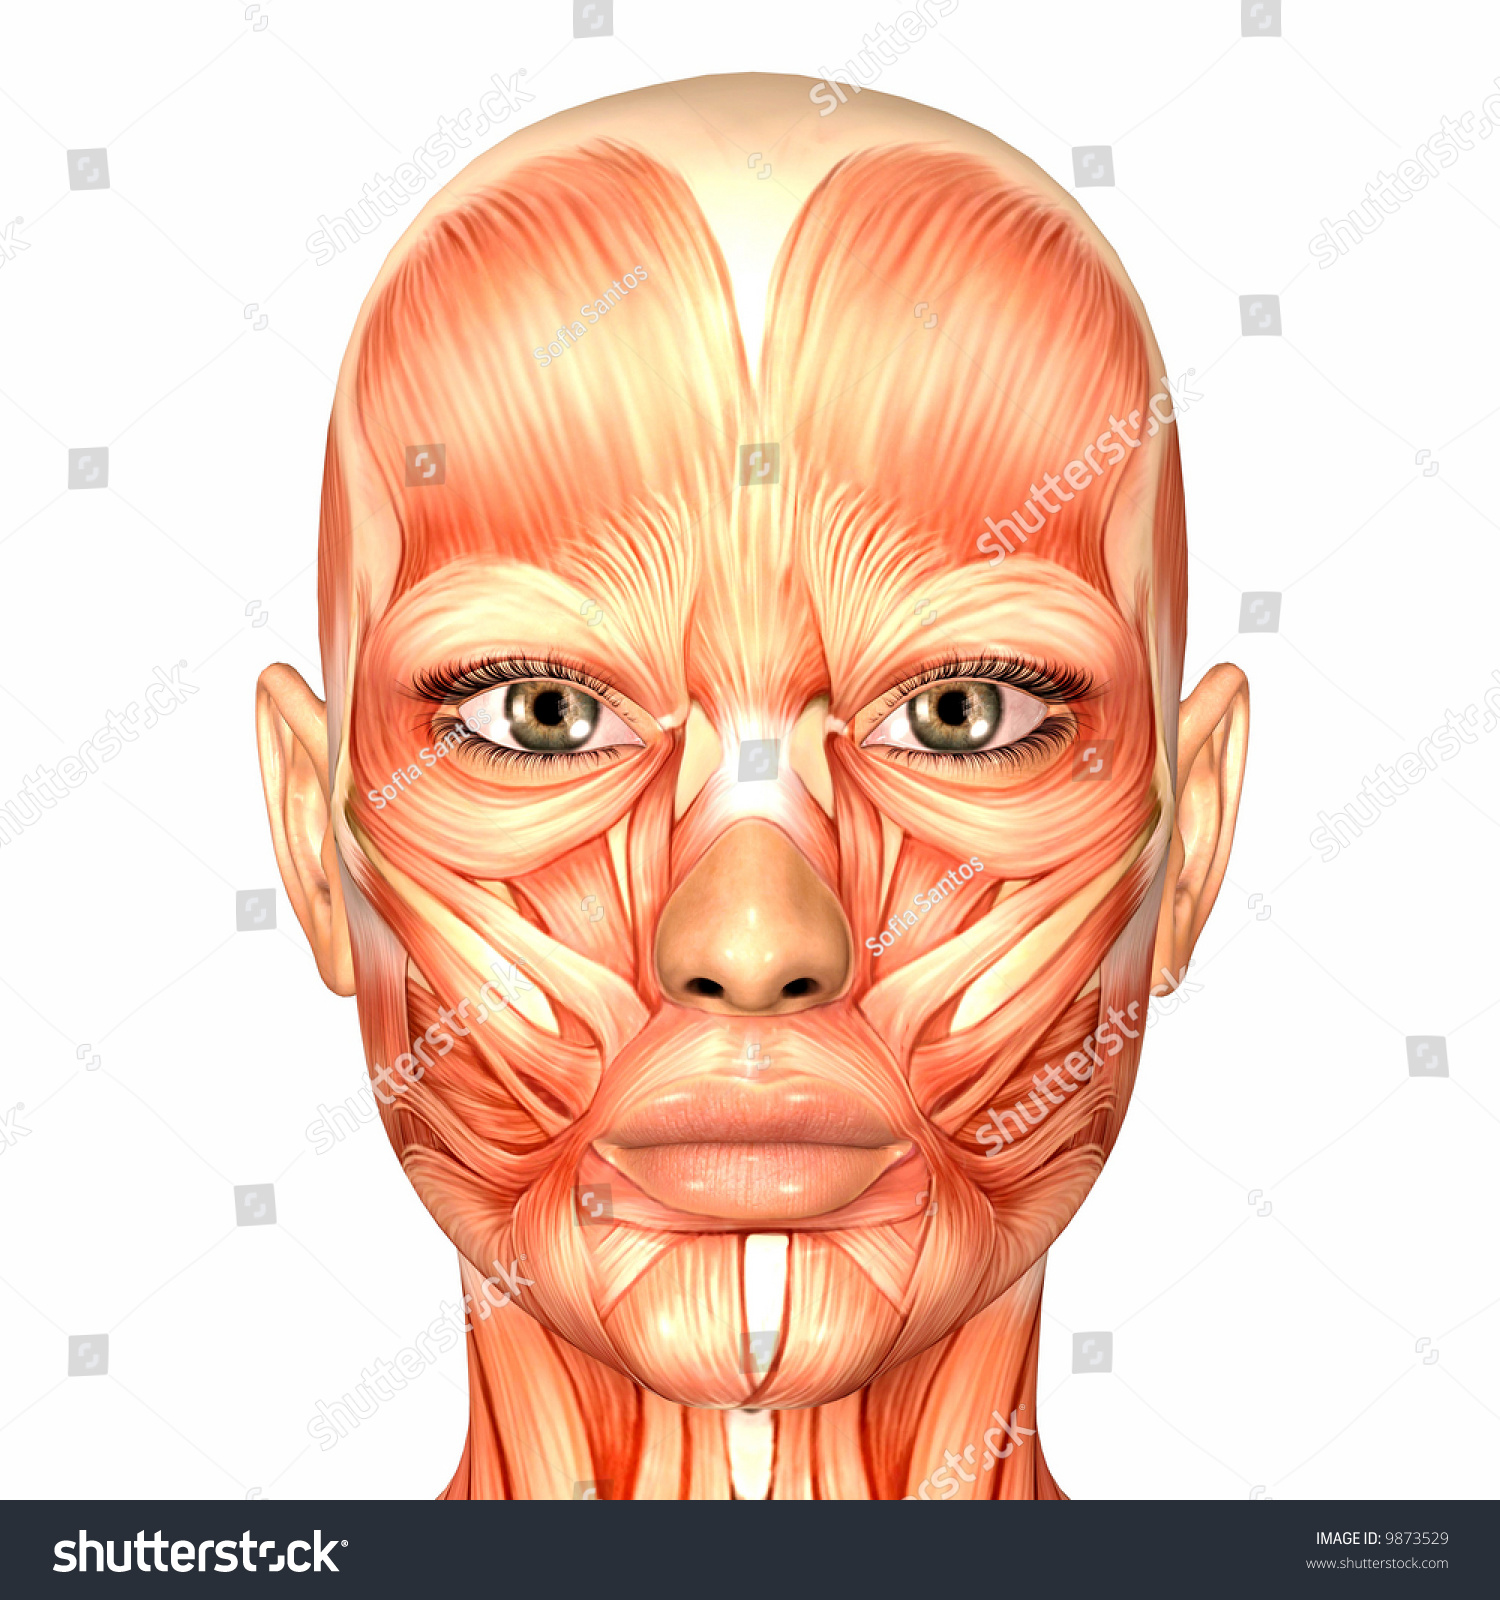 Human Anatomy - Face Stock Photo 9873529 : Shutterstock